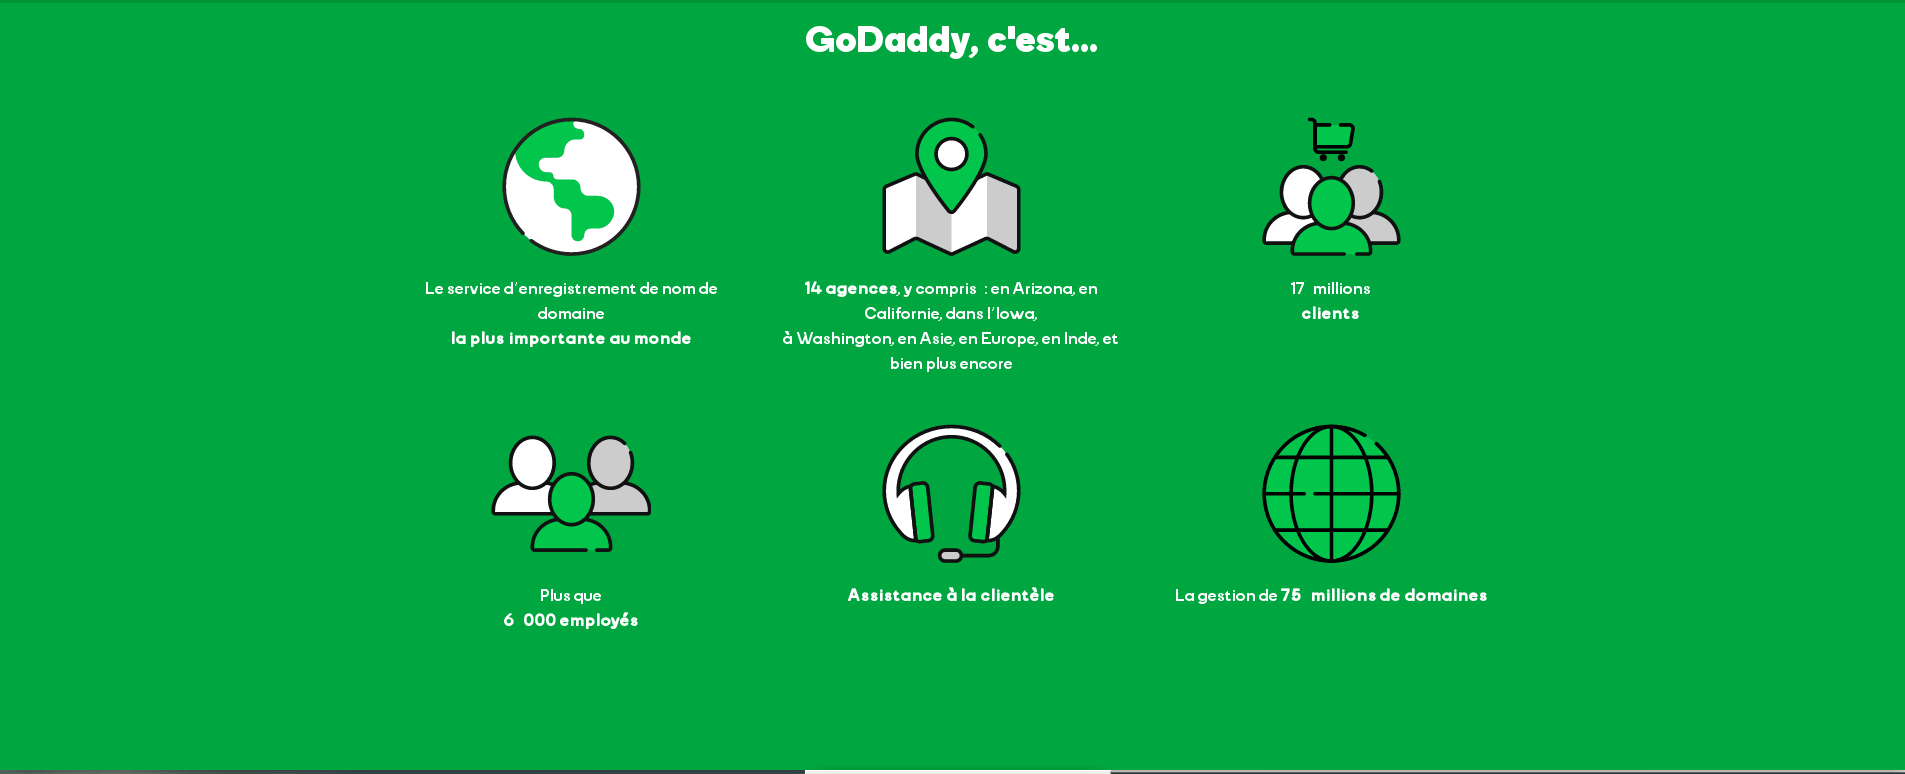 godaddy-conclusion